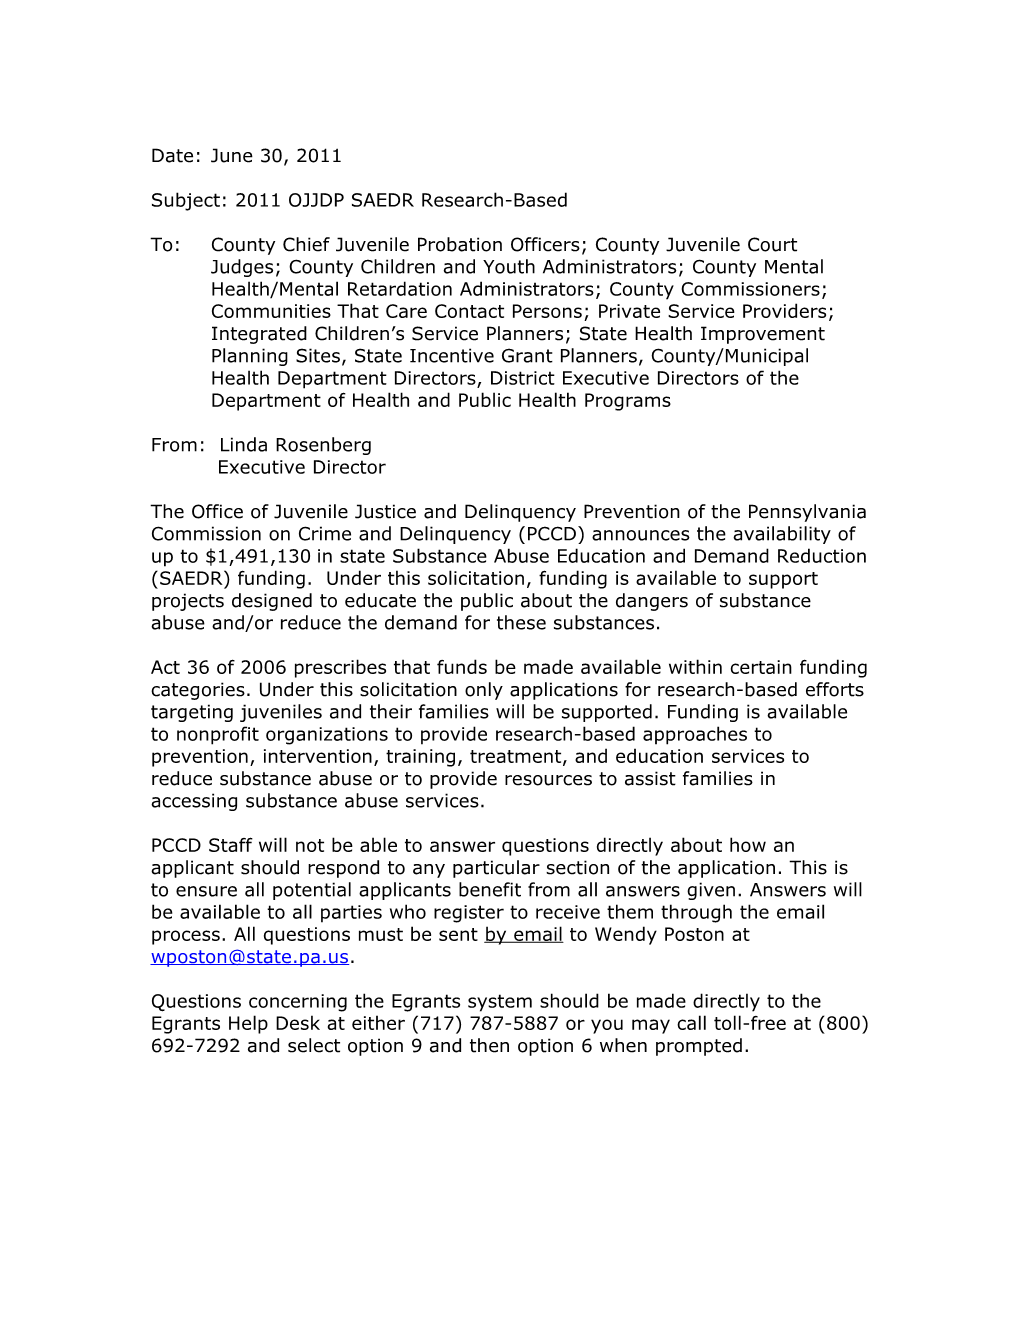 Subject: 2011 OJJDP SAEDR Research-Based